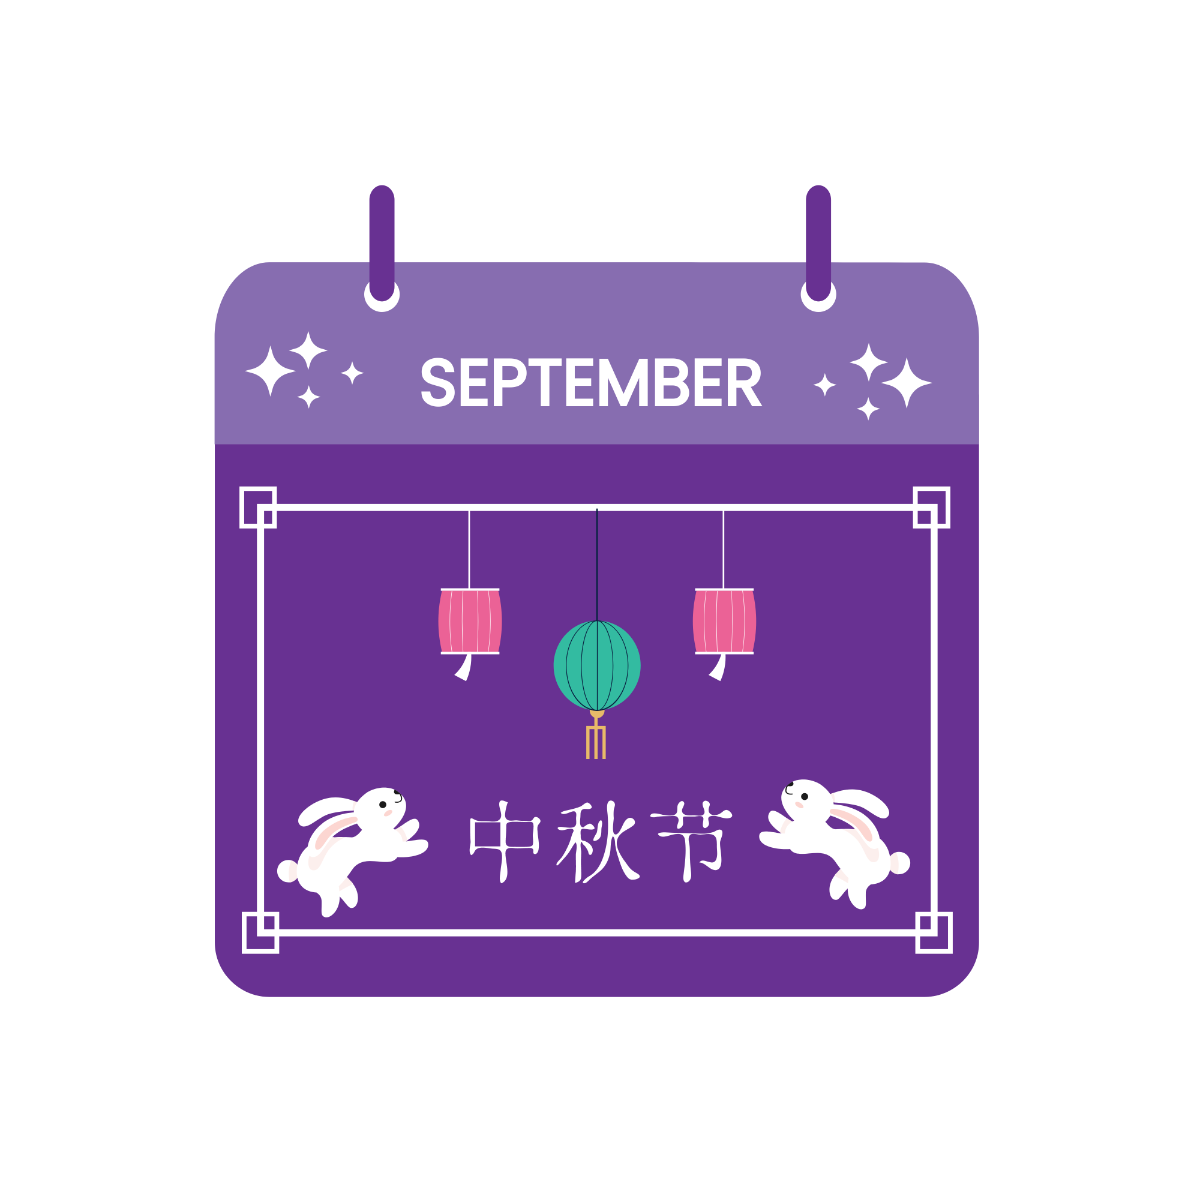 Free Mid-Autumn Festival Calendar Vector Template